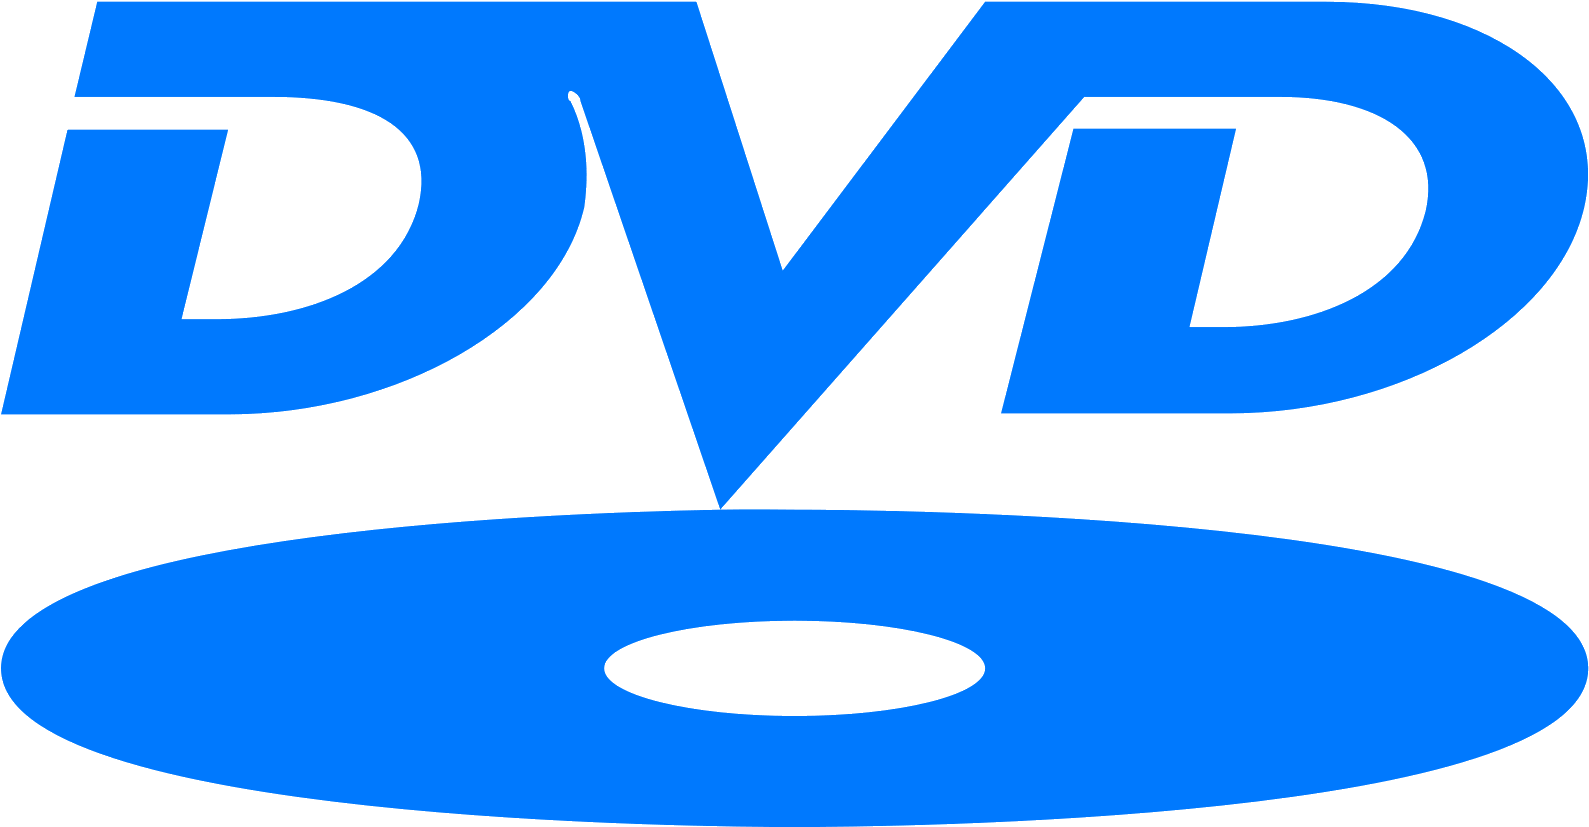 Hd Dvd Dvd-video Logo - Blu-ray Disc (1600x1600)